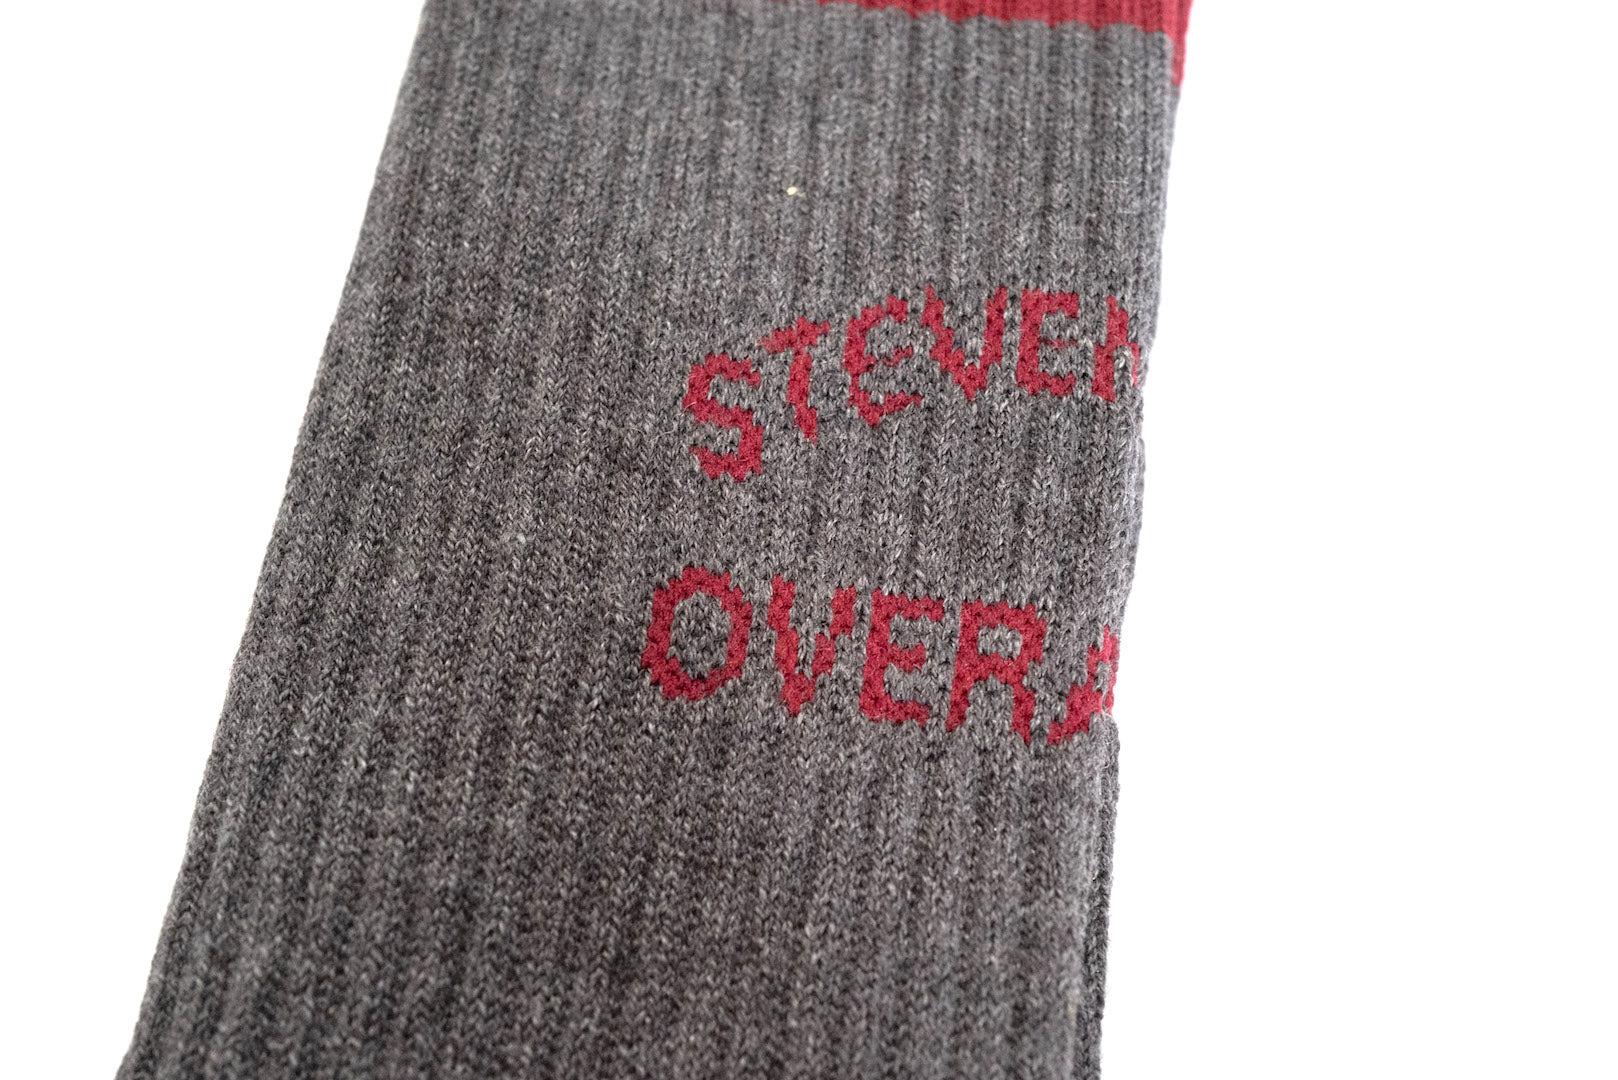 Stevenson Overall Co. 'Mid-Calf' Athletic Socks